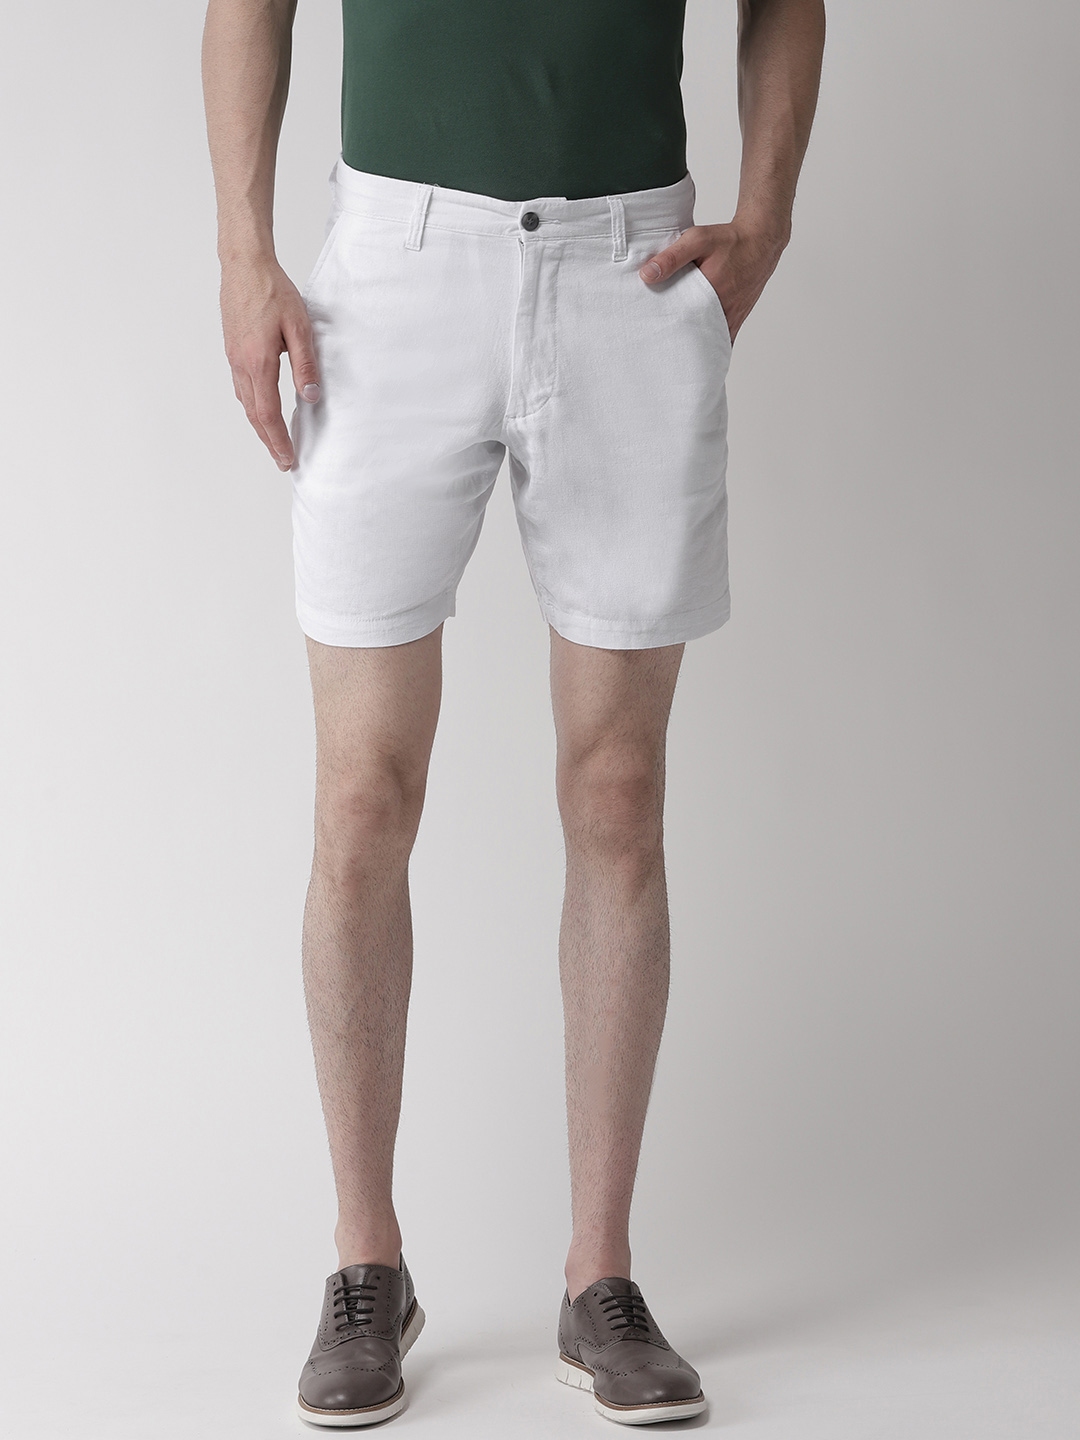 marks and spencer mens denim shorts